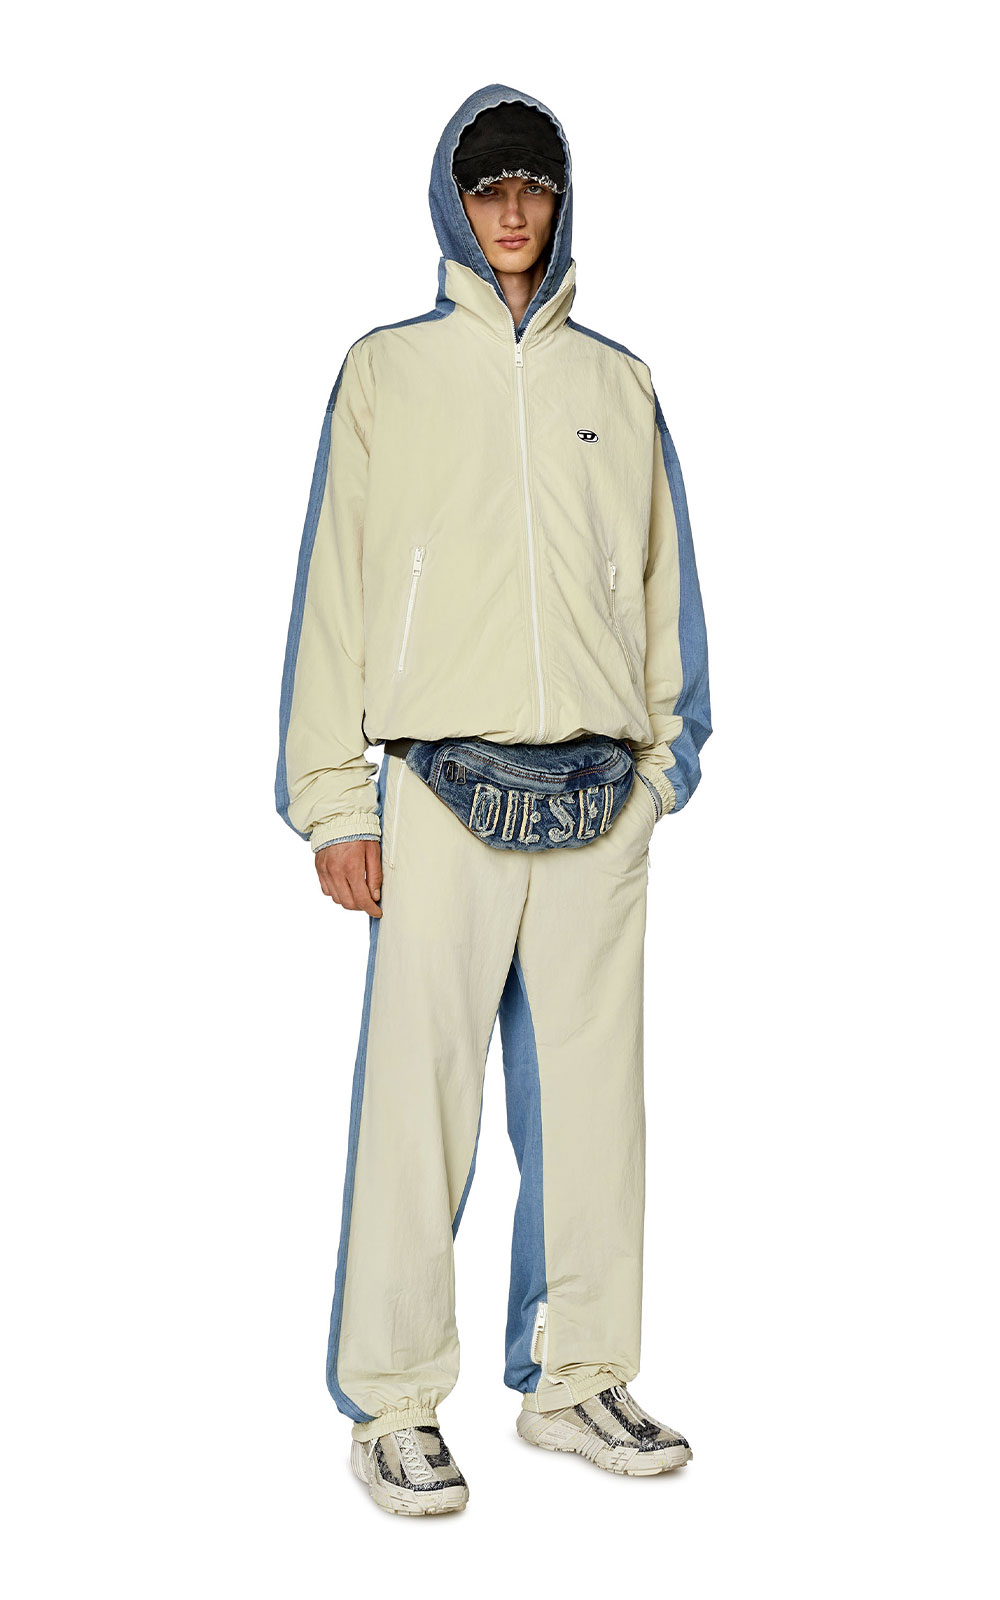 Track pants in wrinkled nylon and denim